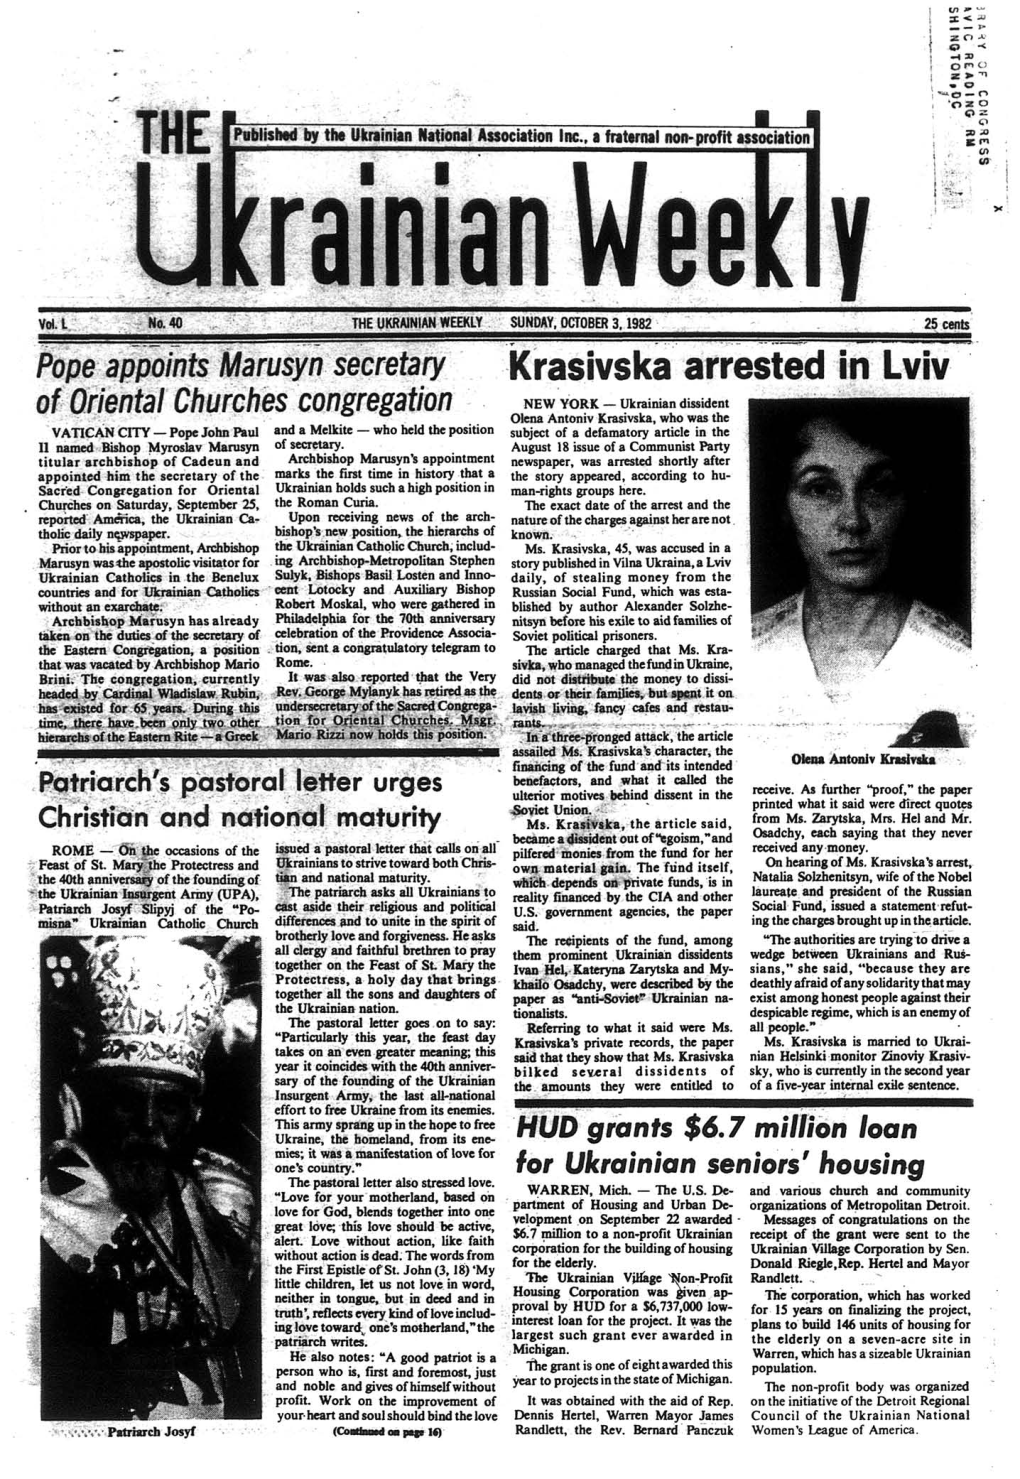 The Ukrainian Weekly 1982, No.40